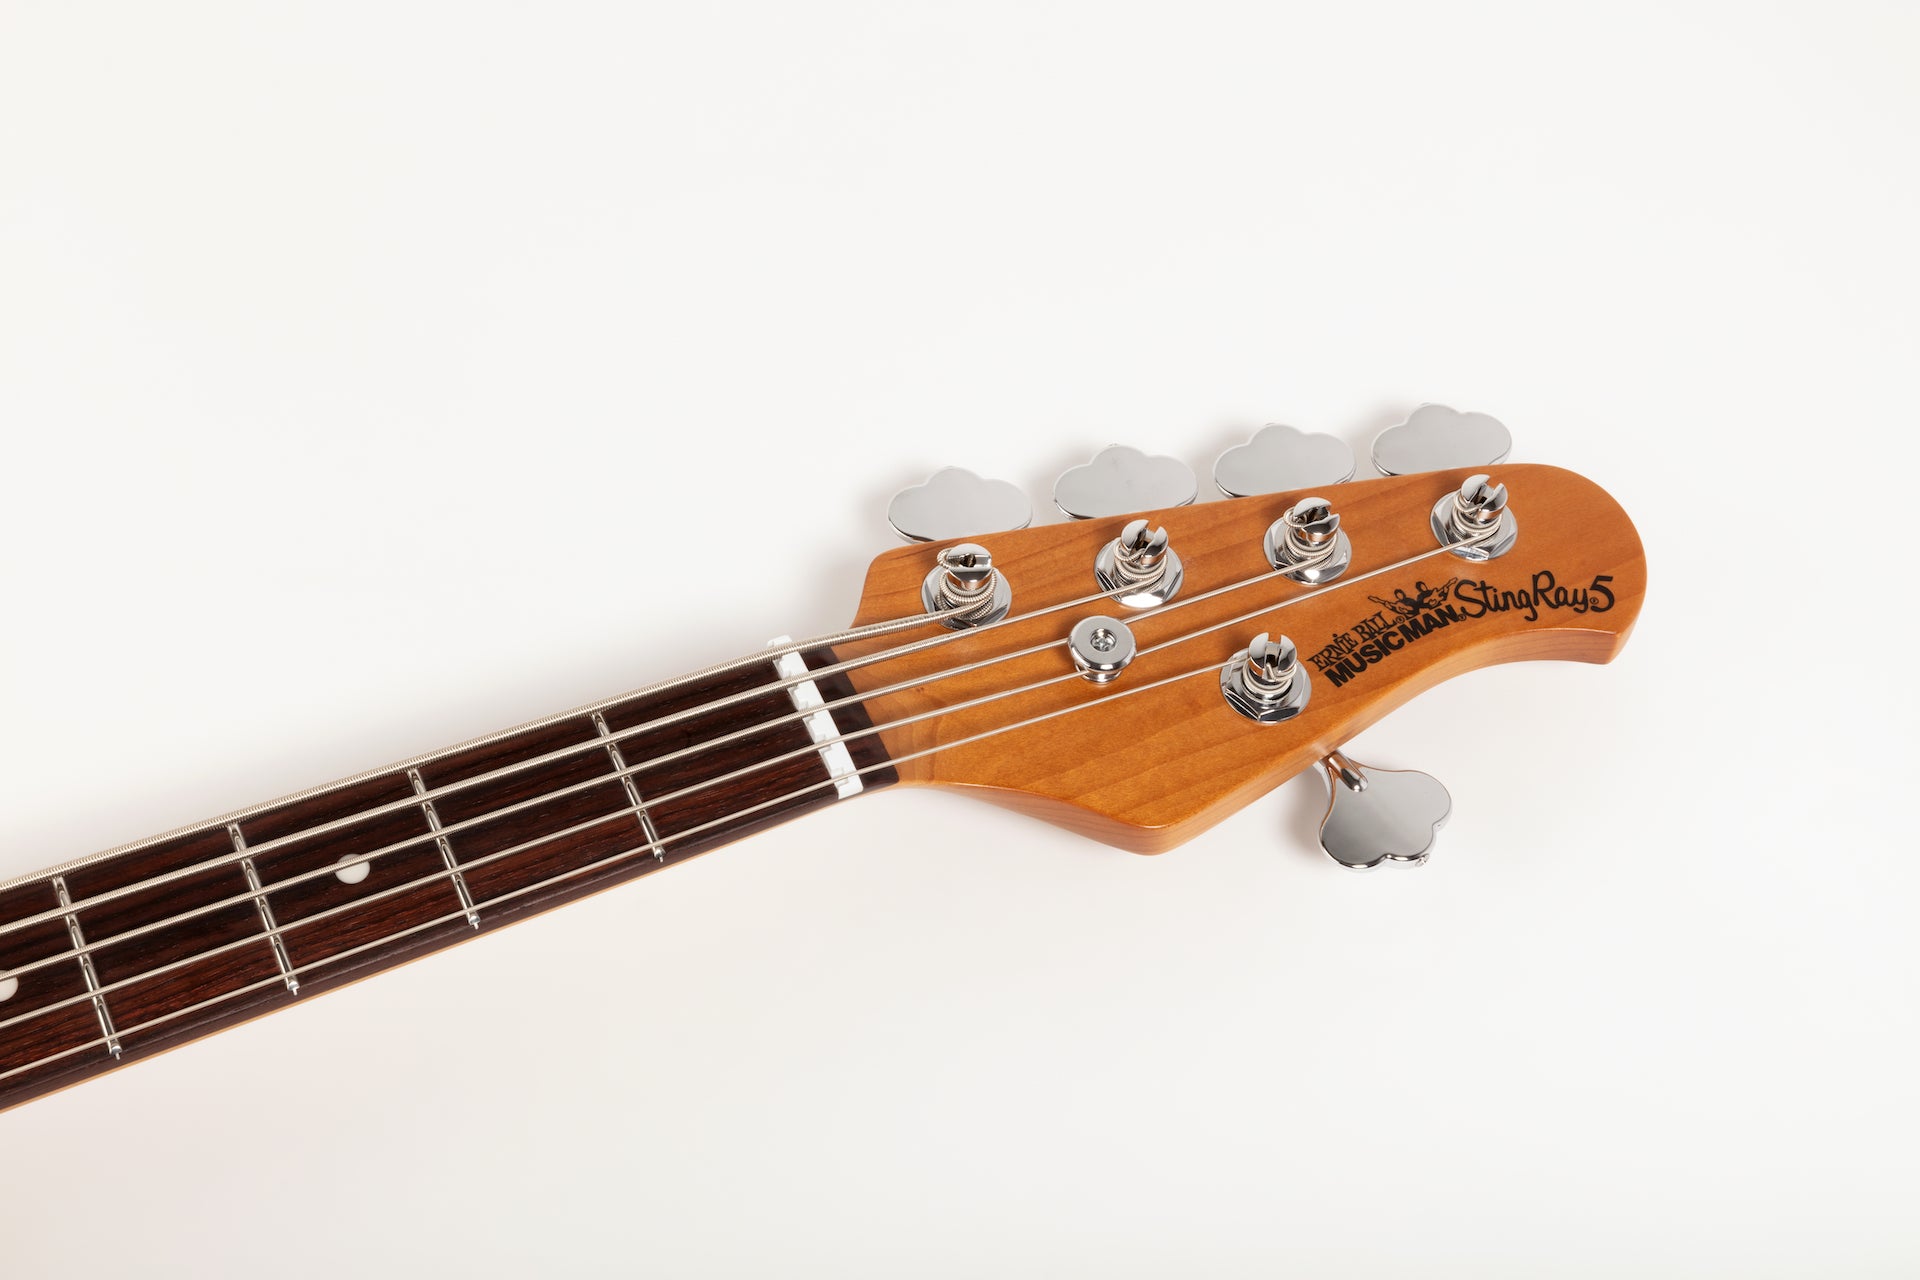 Ernie Ball Music Man StingRay Special 5 H Bass Guitar - Burnt Ends with Rosewood Fingerboard F95728 - HIENDGUITAR   Musicman bass